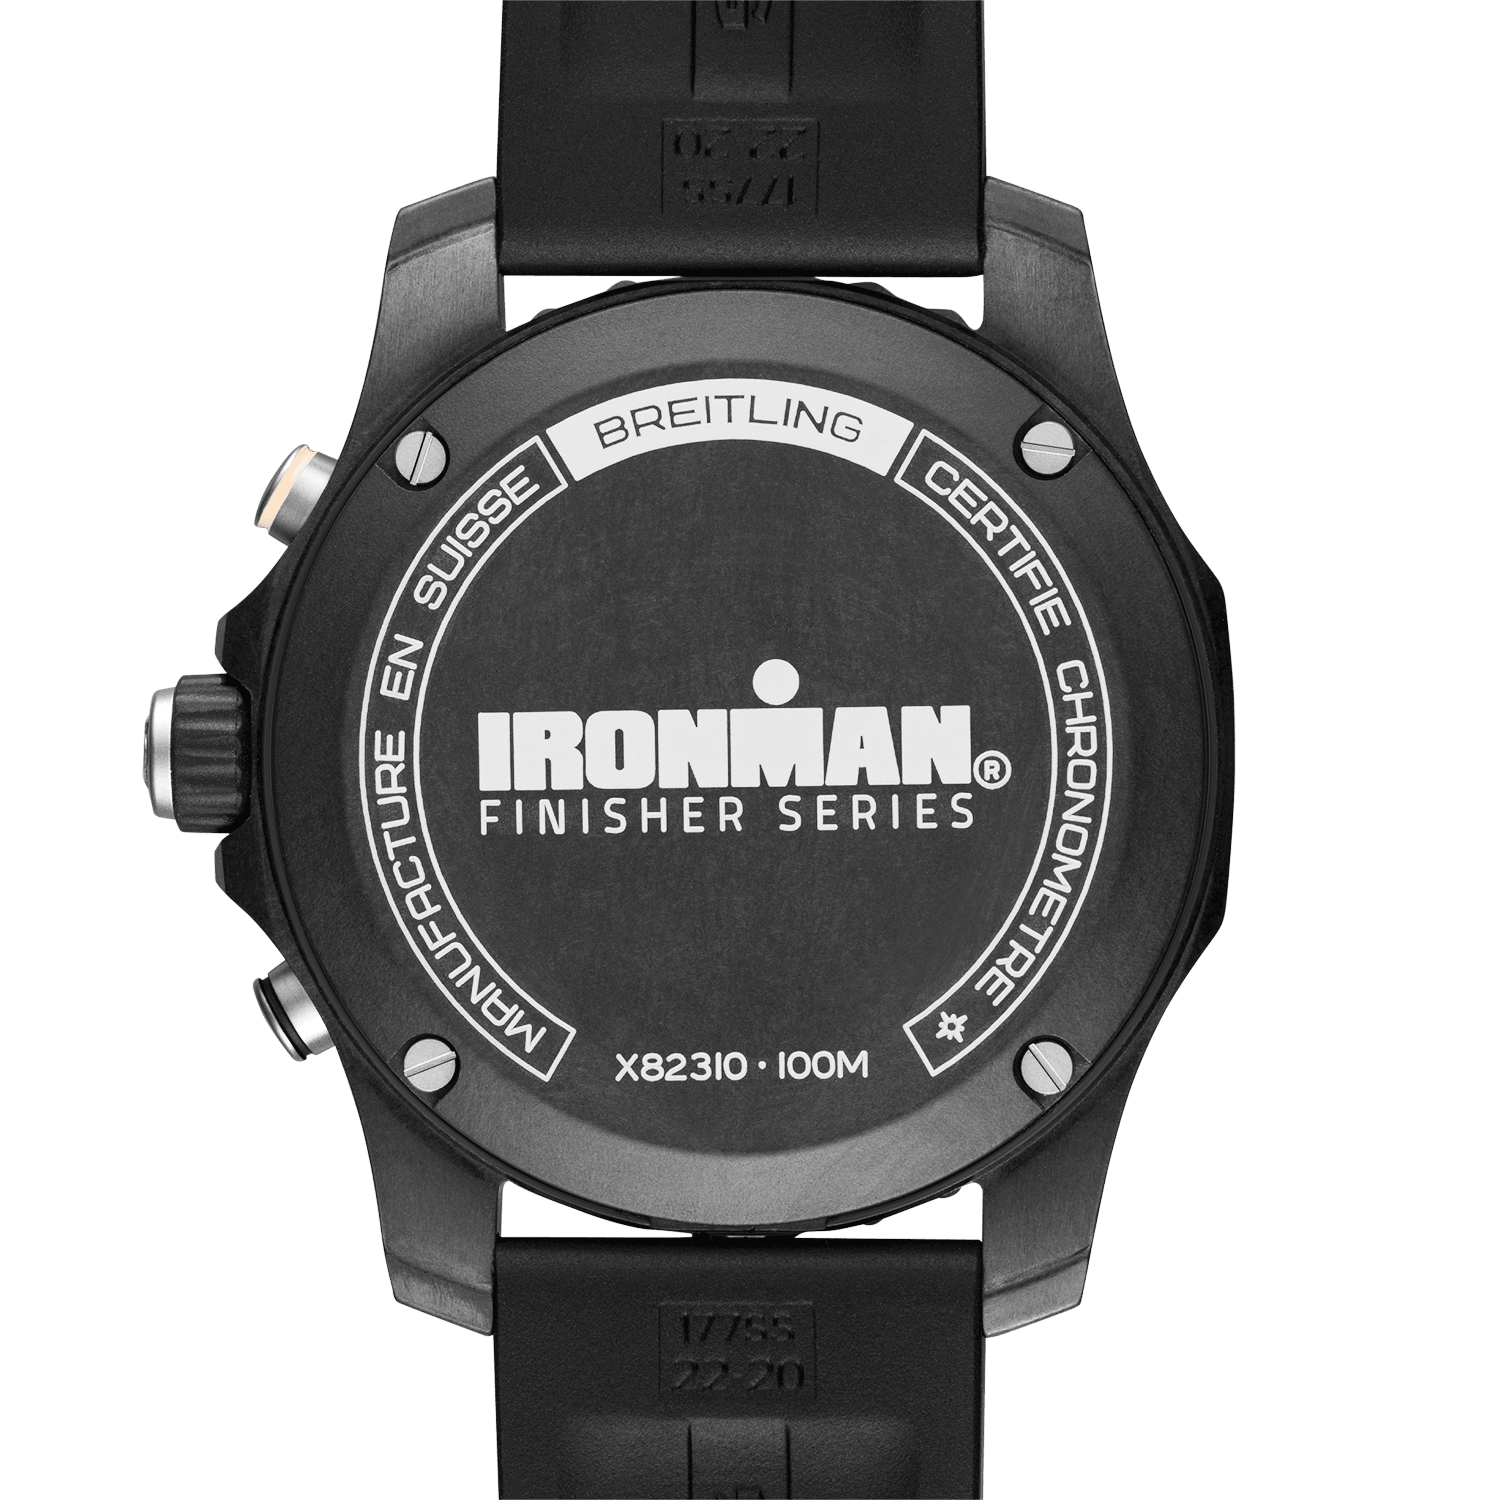 Endurance Pro IRONMAN Finisher 44mm Breitlight Black Strap Watch